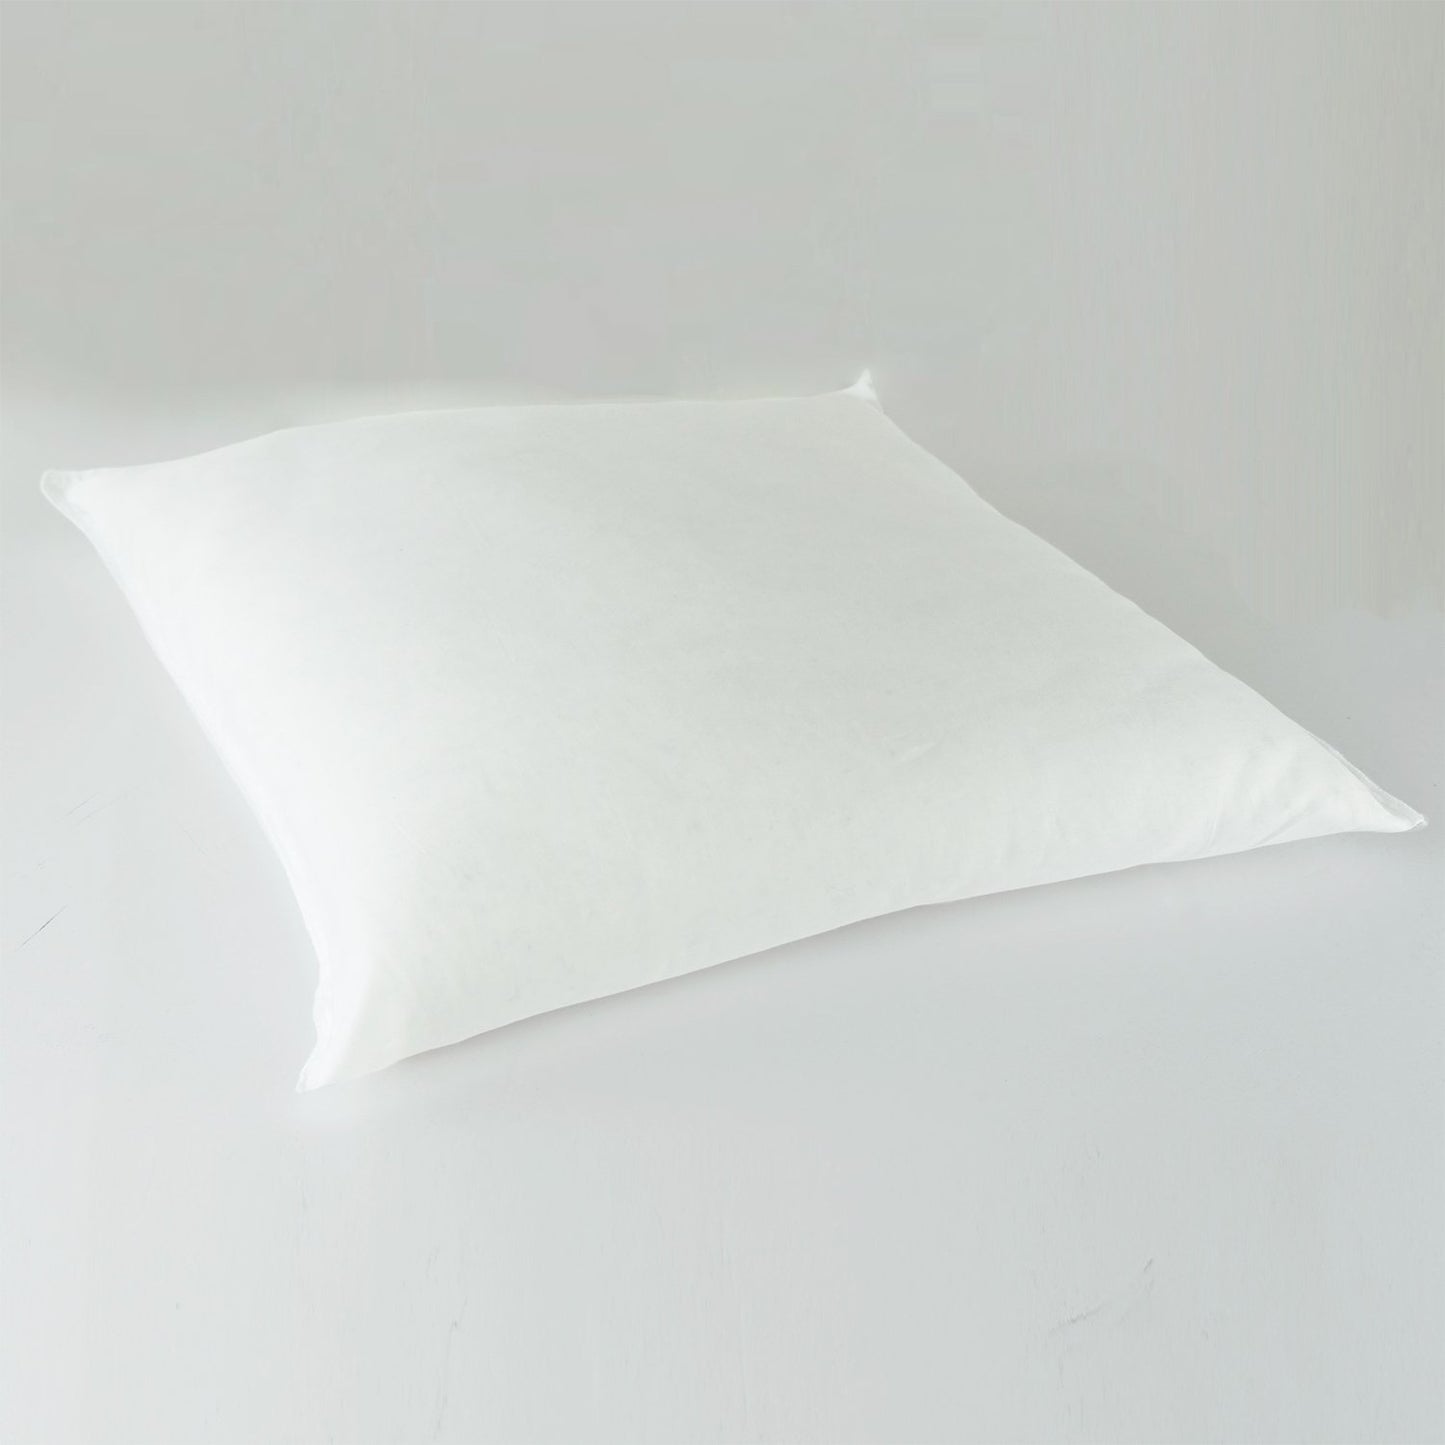 J-Life Nightfall Zabuton Floor Pillow_Pillows & Shams_Zabuton Floor Pillows_100% Cotton_Reversible_Handmade